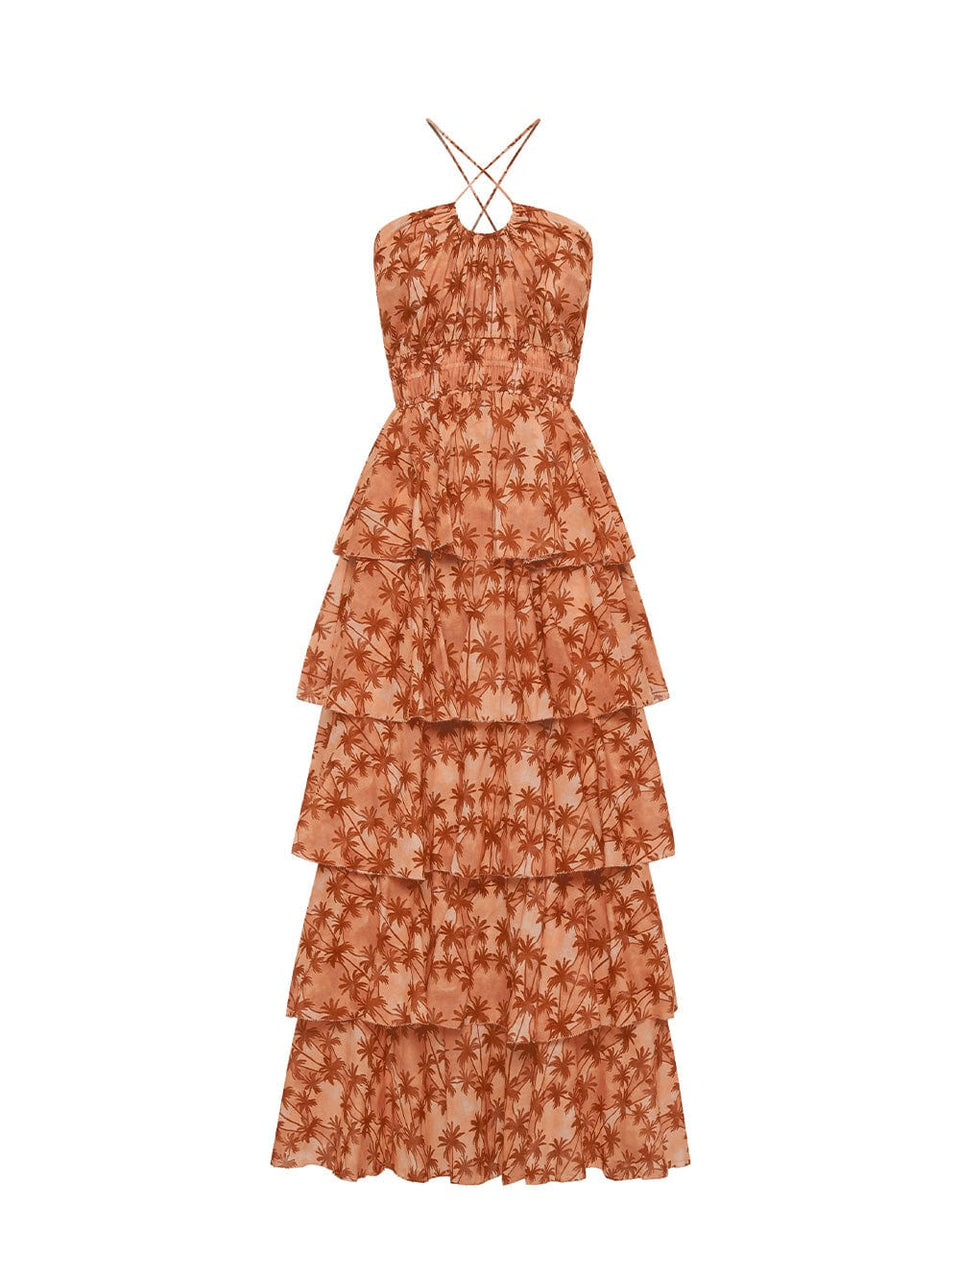 Leilani Maxi Dress KIVARI | Bronze and peach palm printed maxi dress